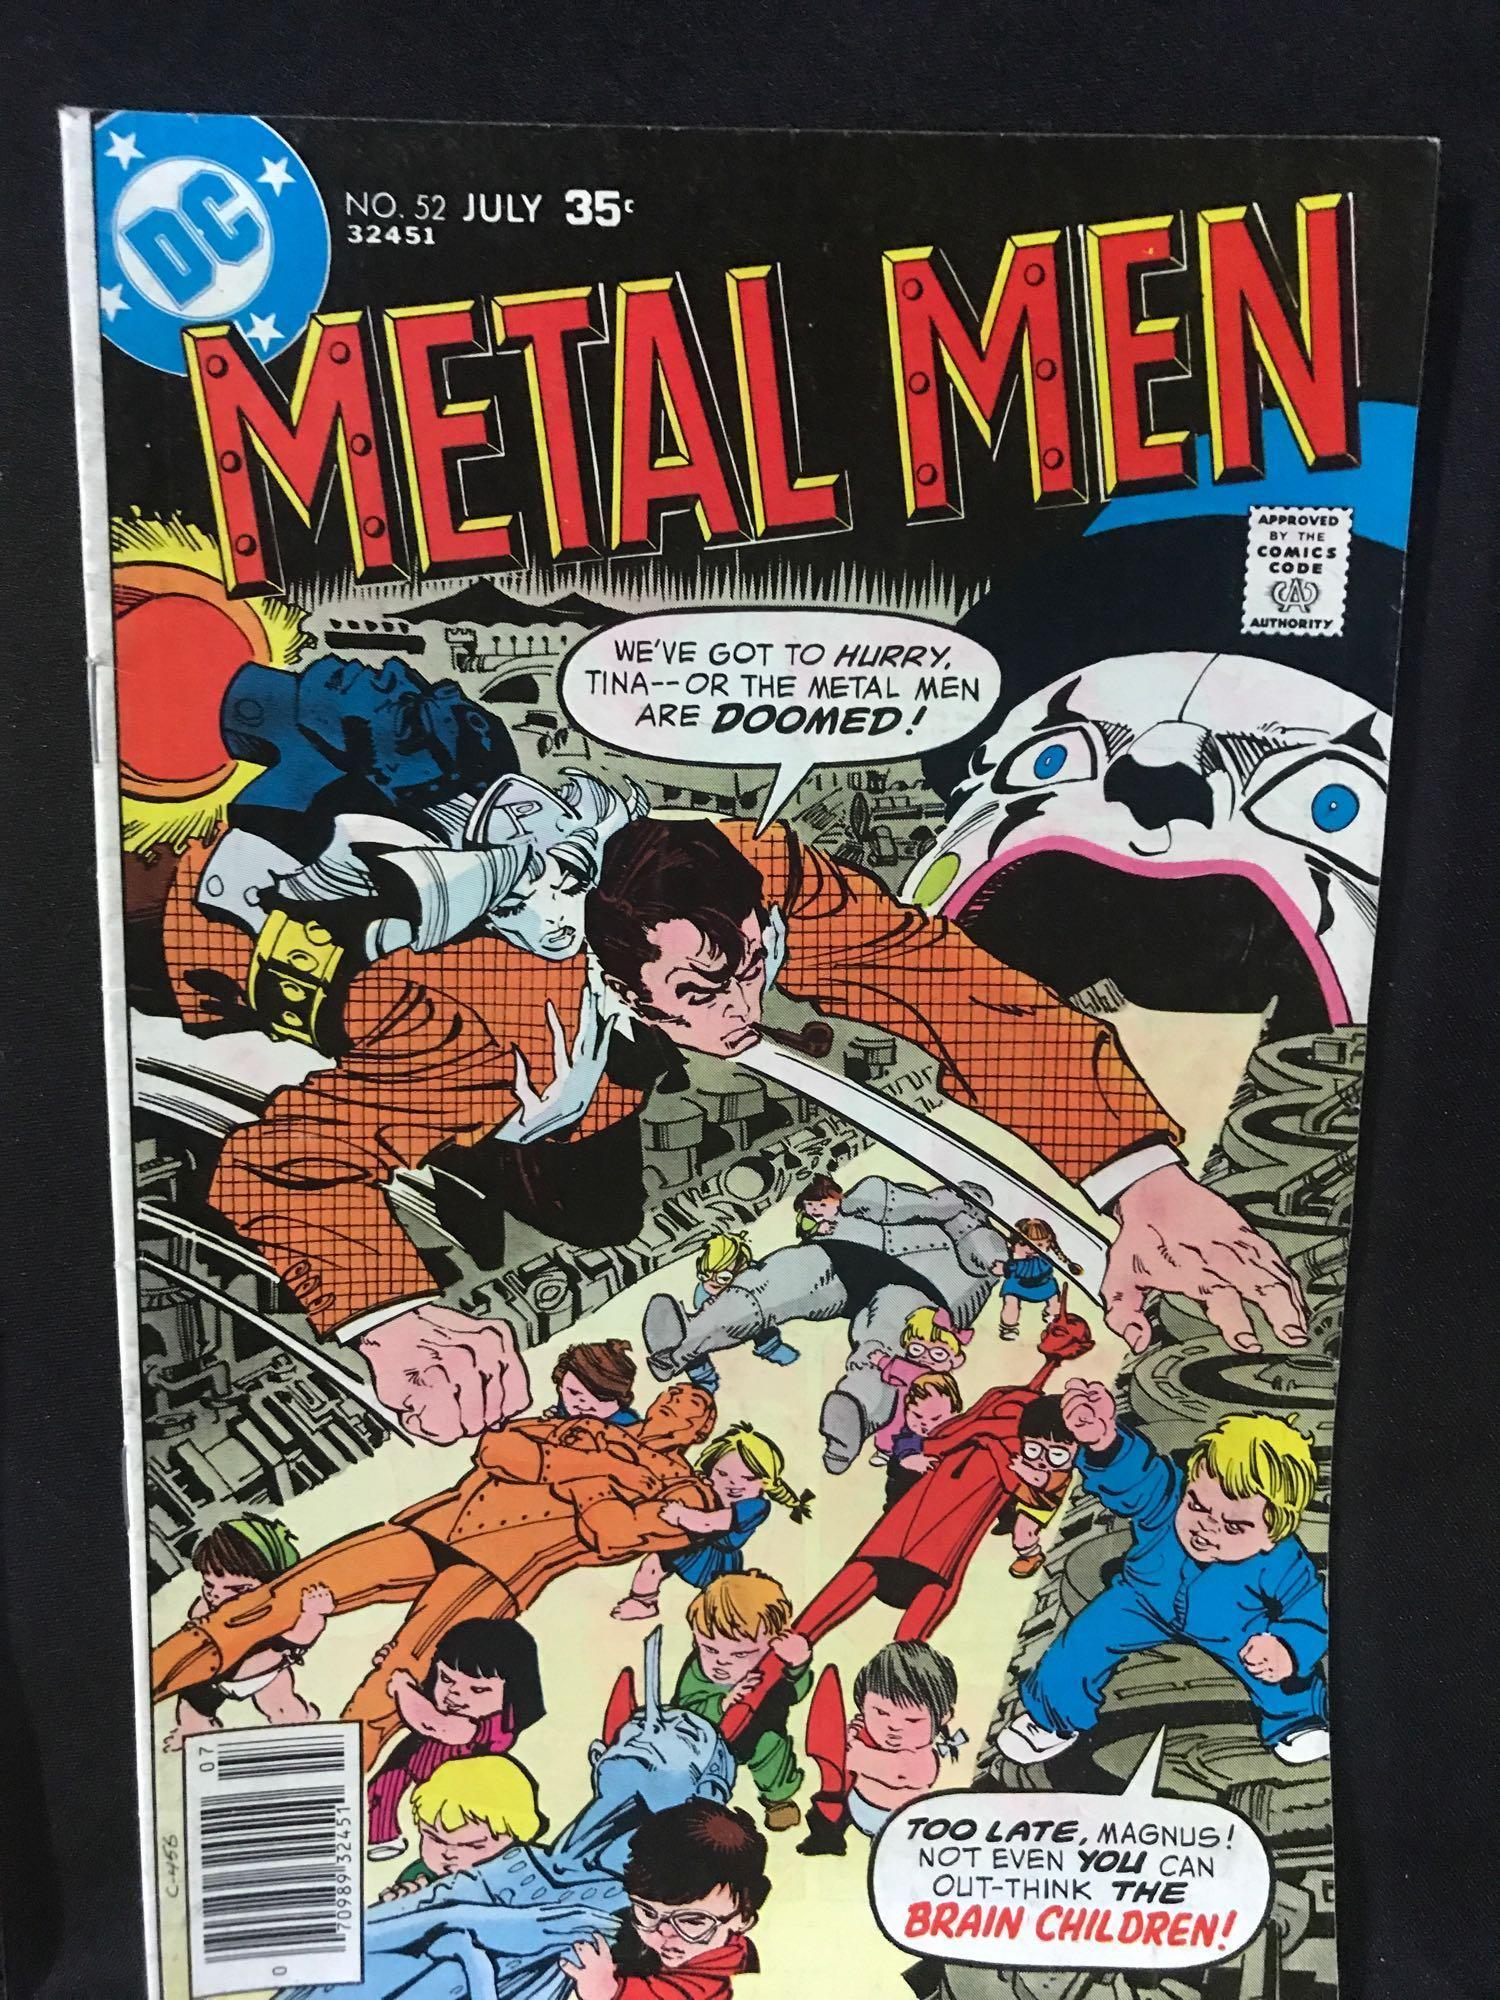 DC Metal Men Comics